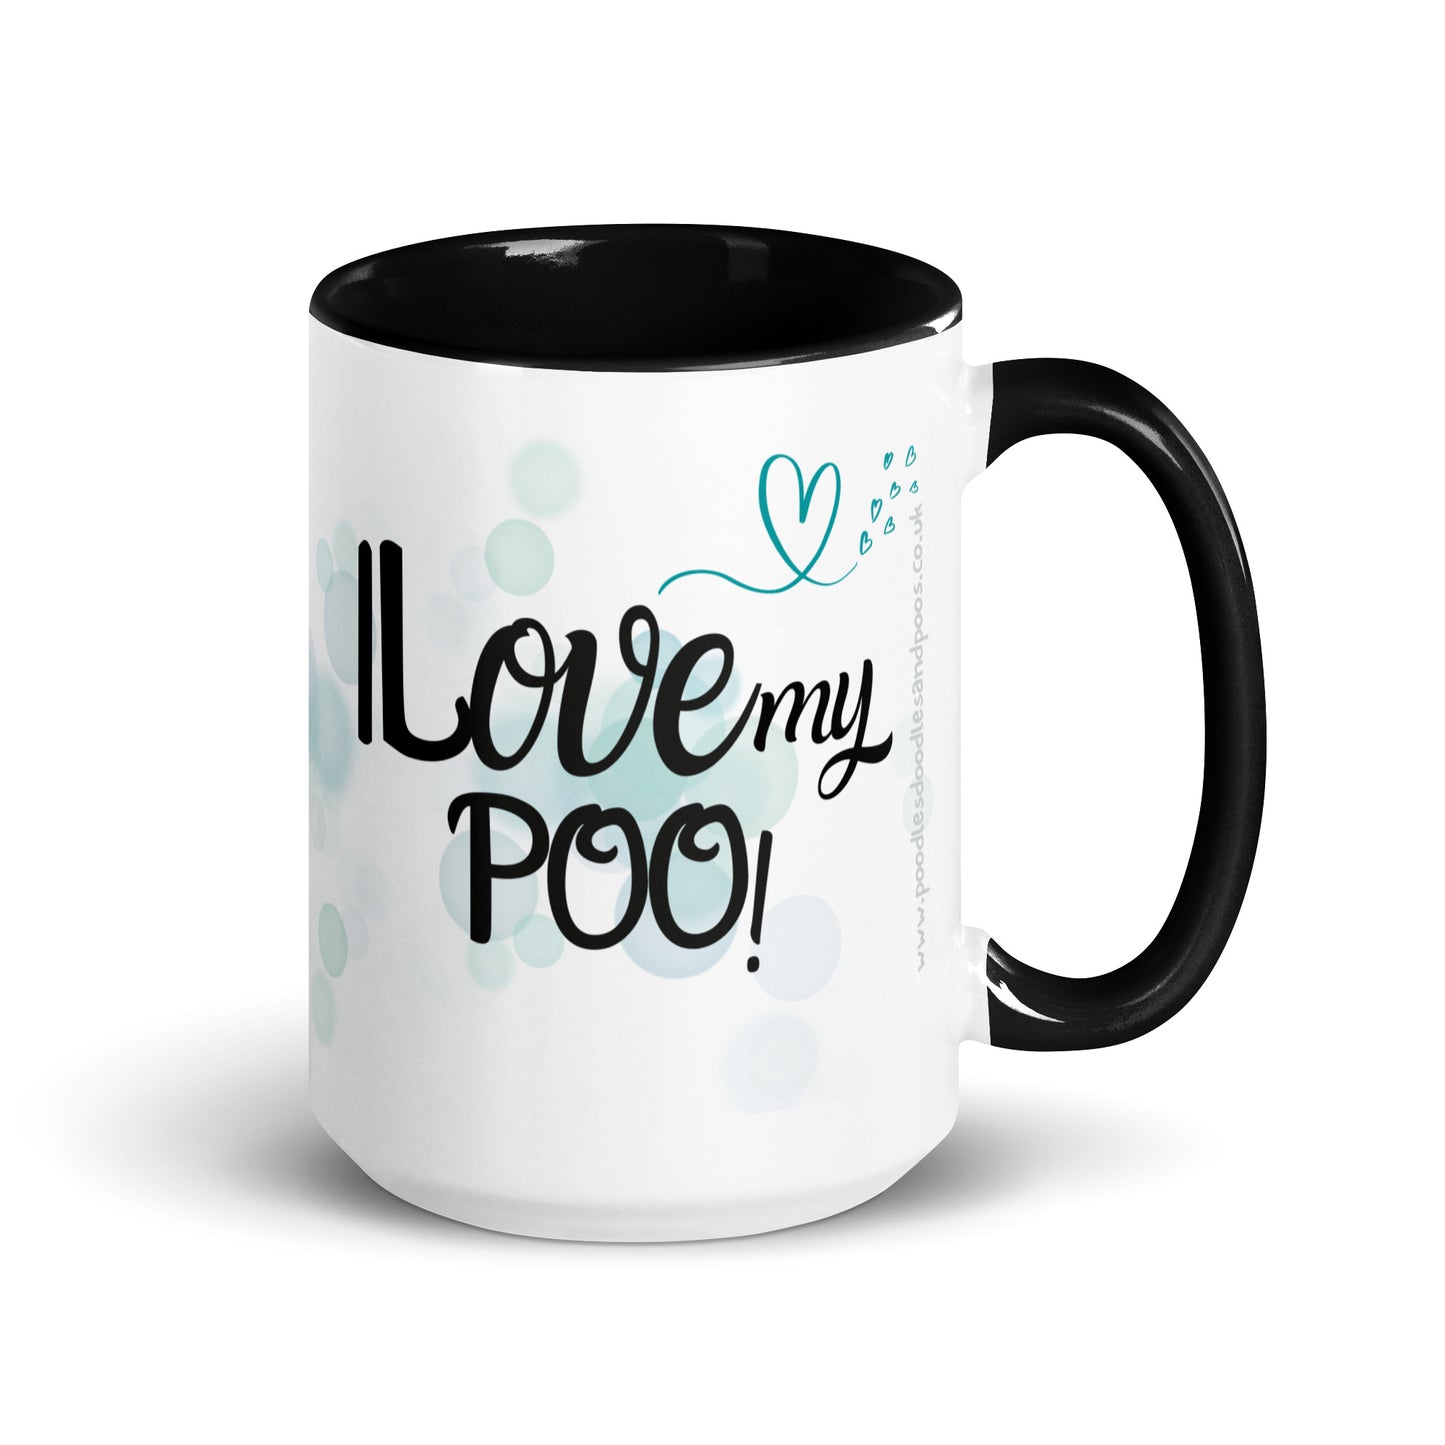 "I Love my..." mug with black Inside - black Cockapoo